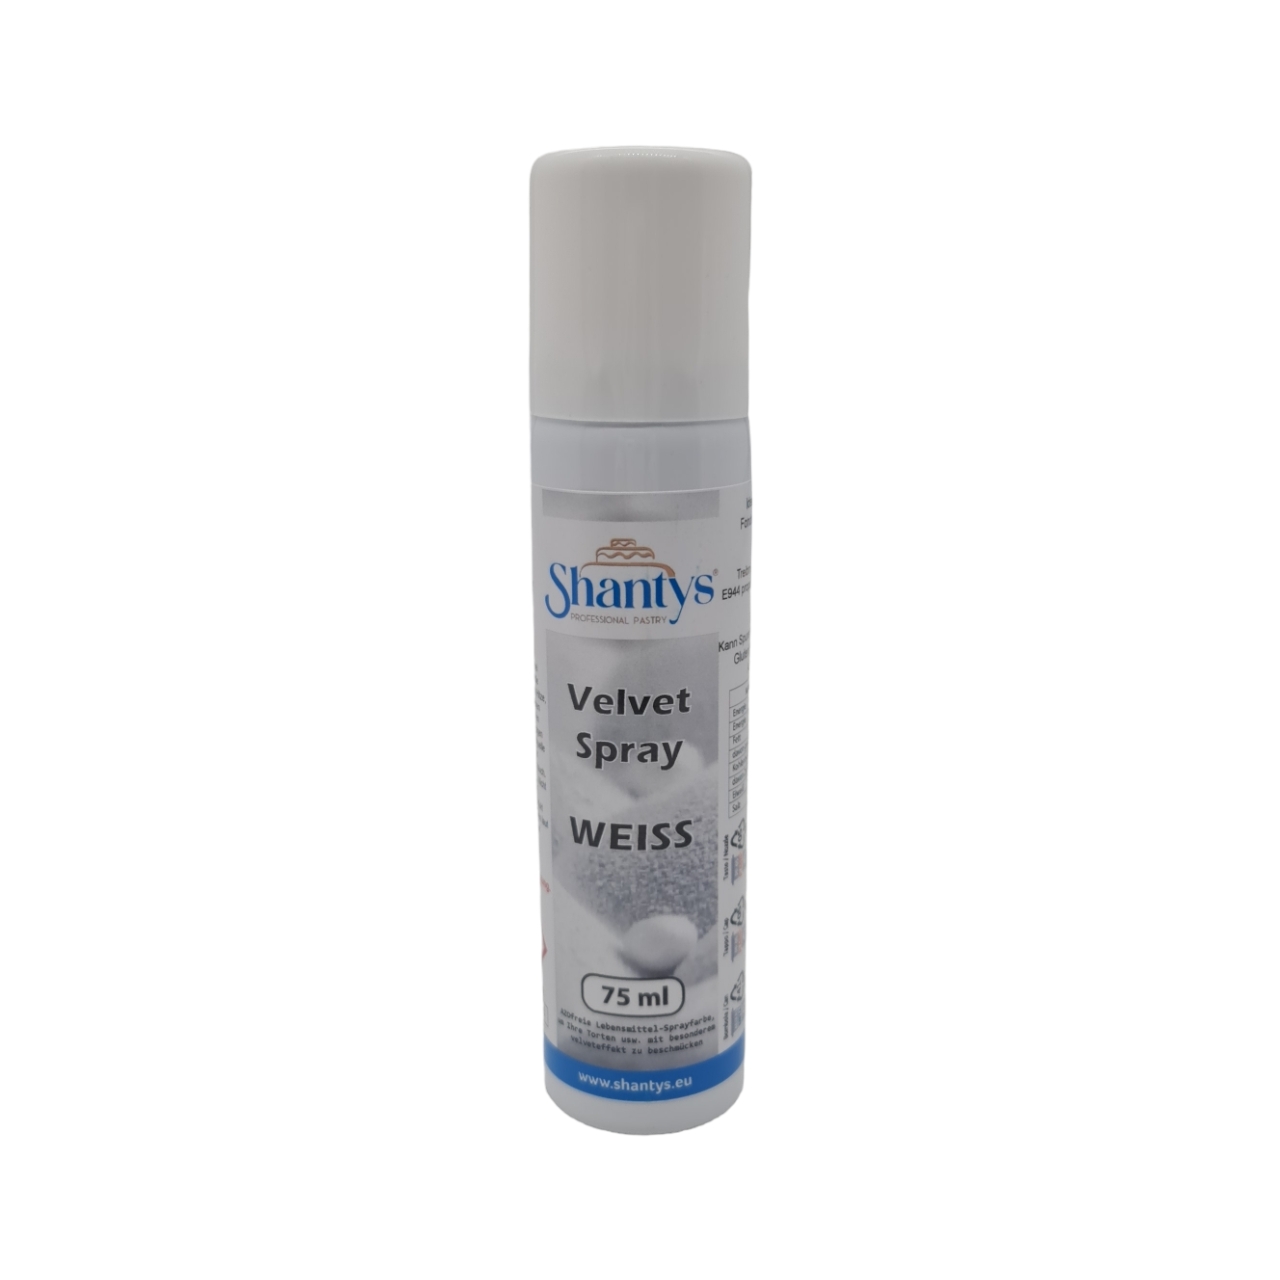 Velvet Spray WEISS - 75 ml - (Shantys)